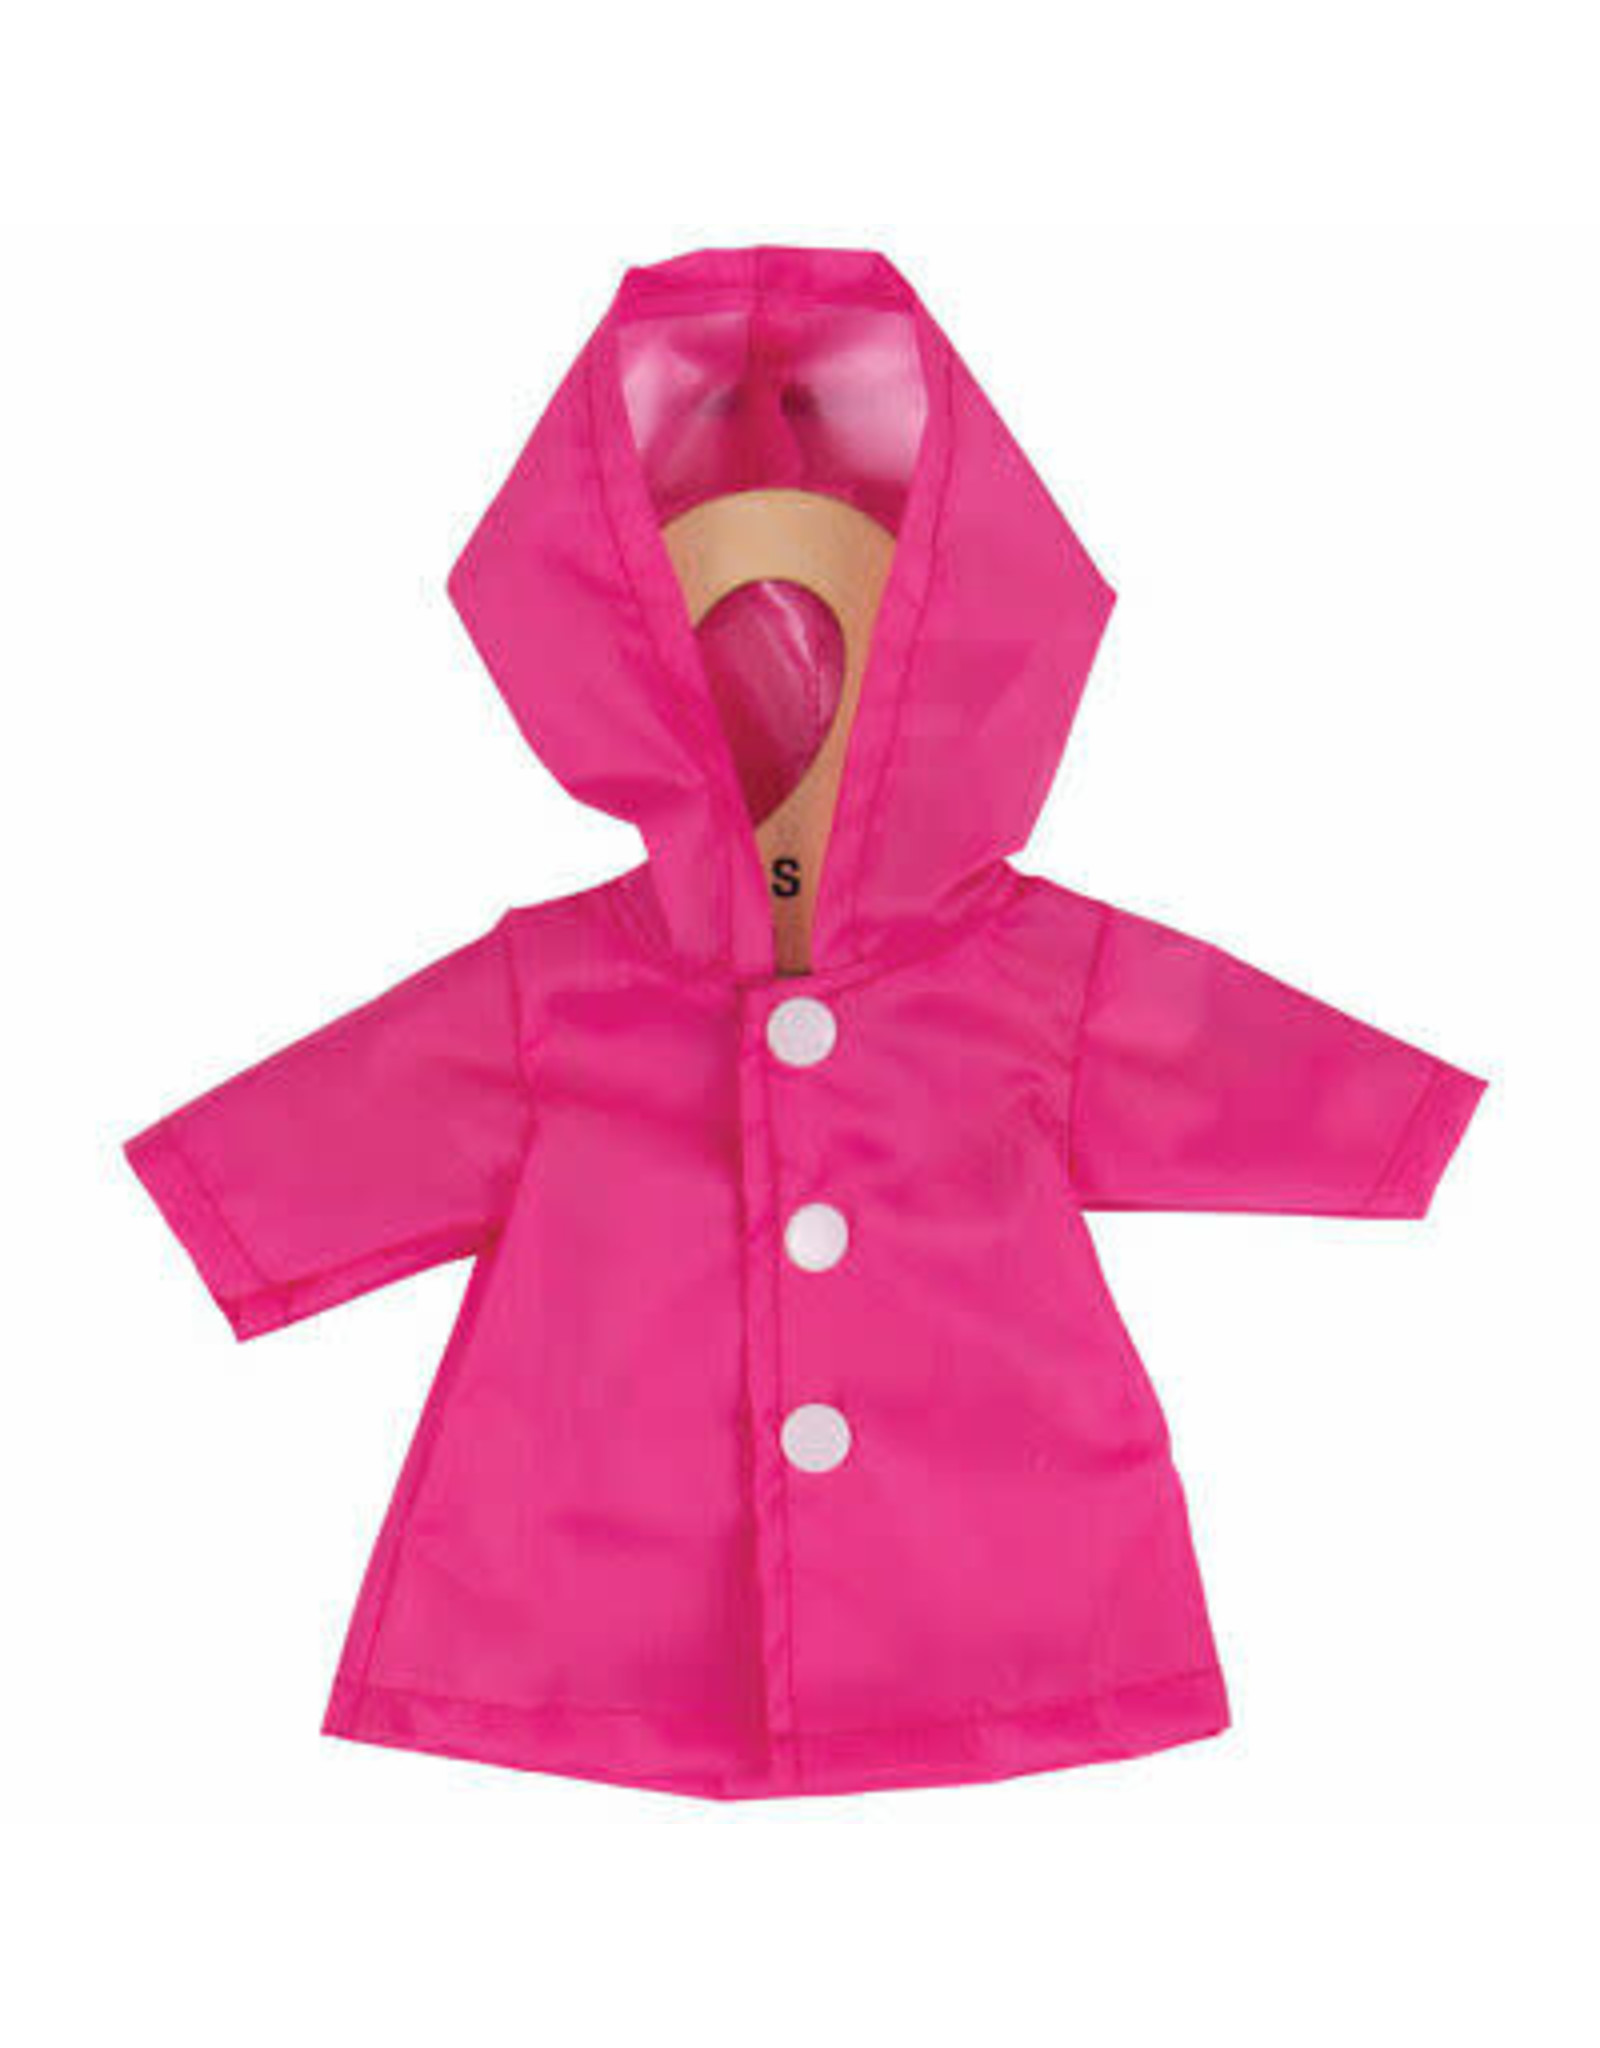 Small Pink Raincoat